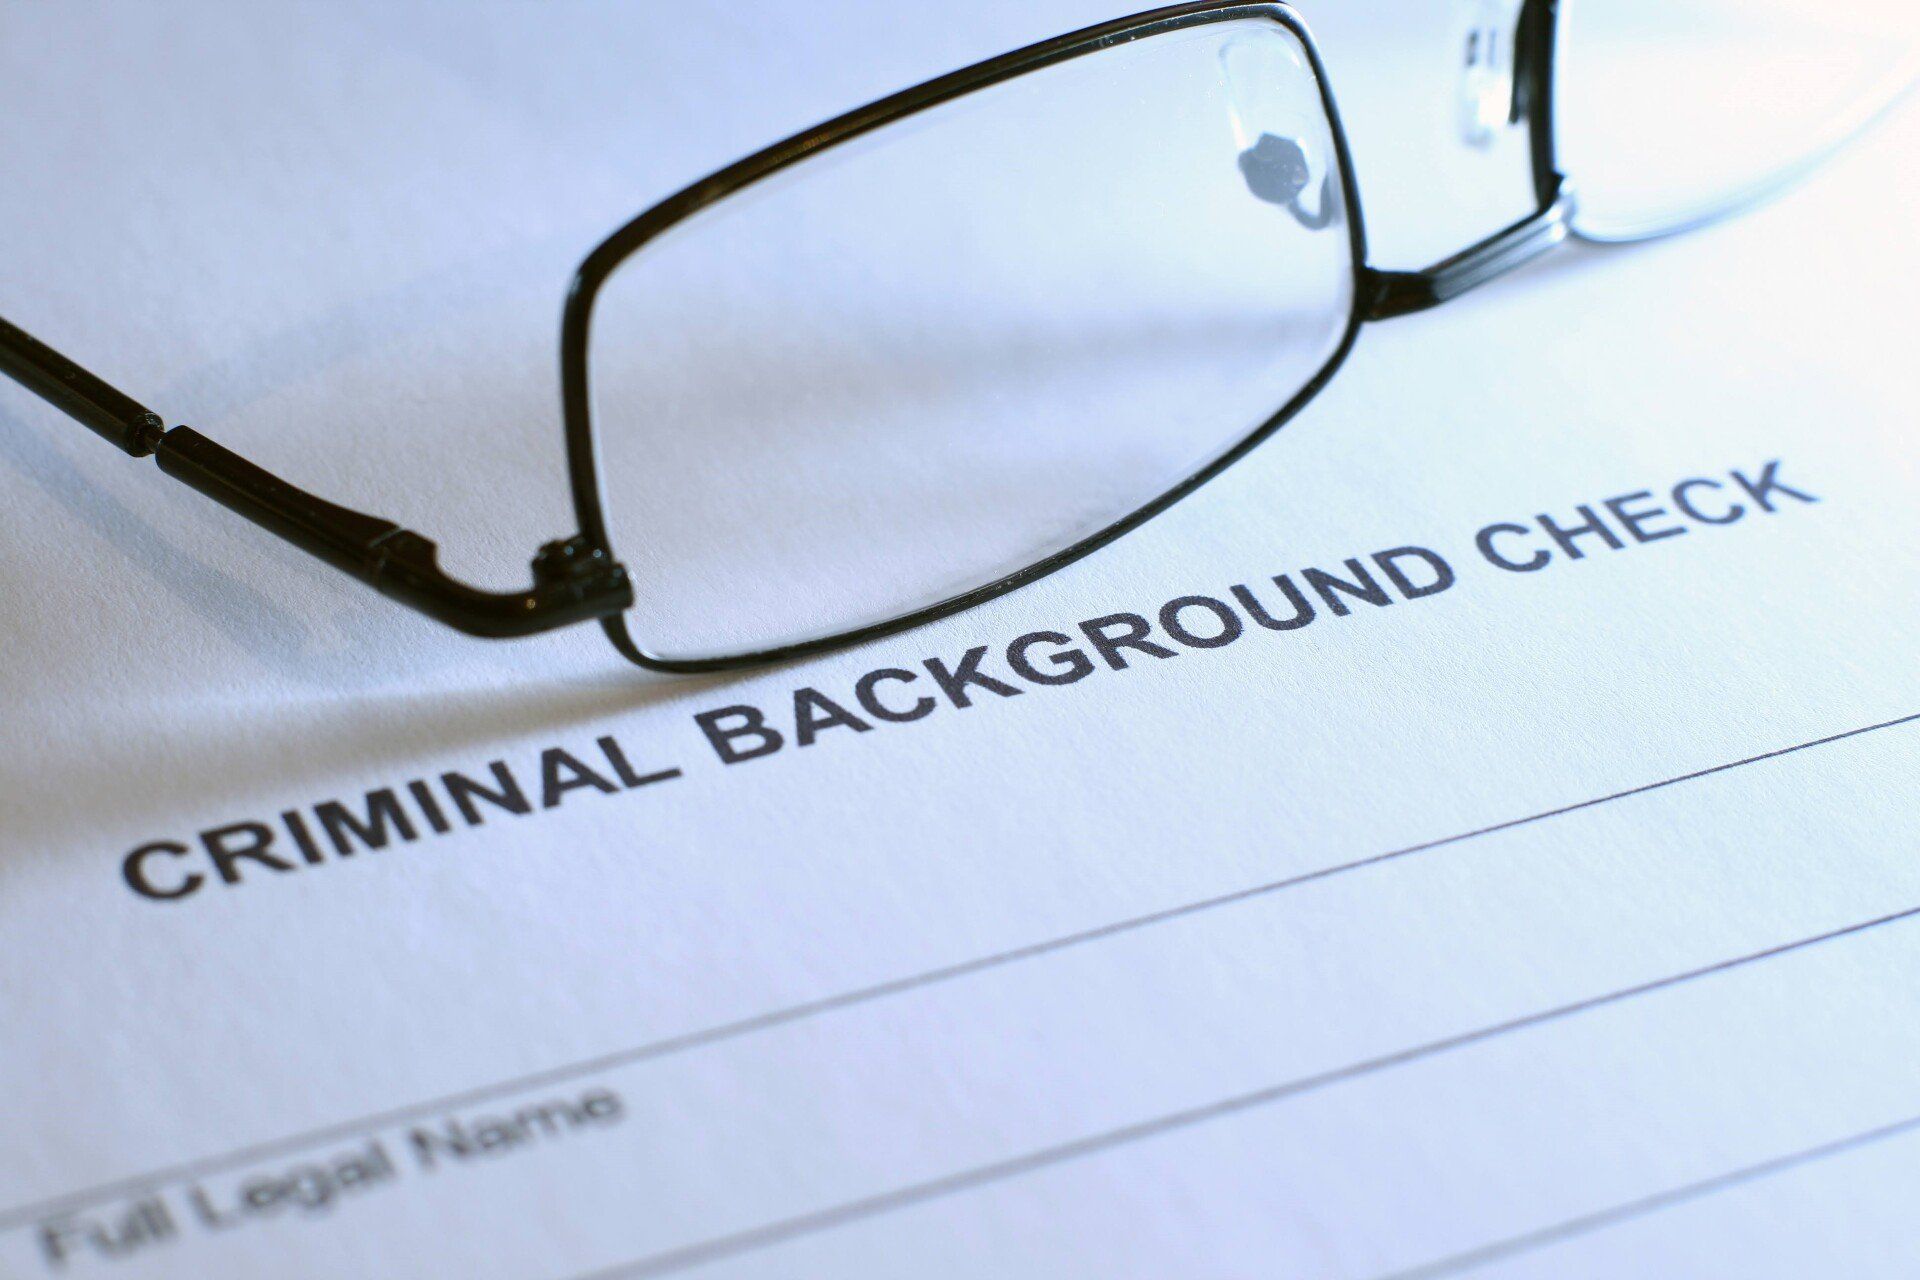 Criminal Background Check Form — Manifee, CA — Law Office Of Robert P Karwin